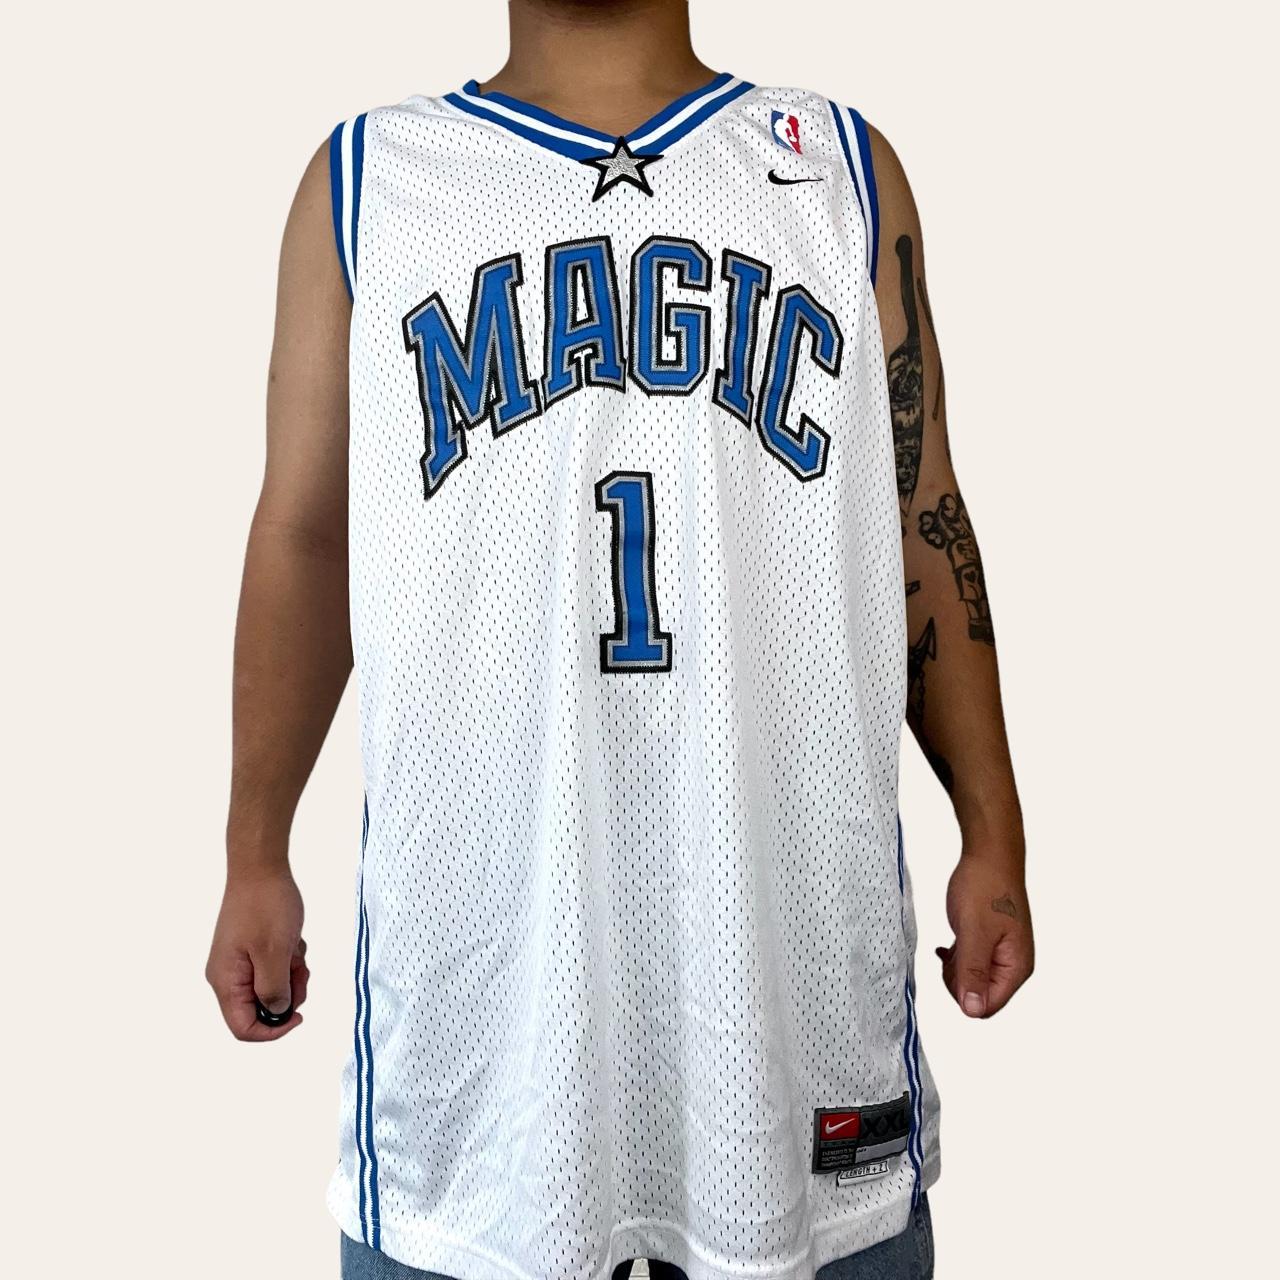 Vintage NBA Orlando Magic champion jersey in an - Depop